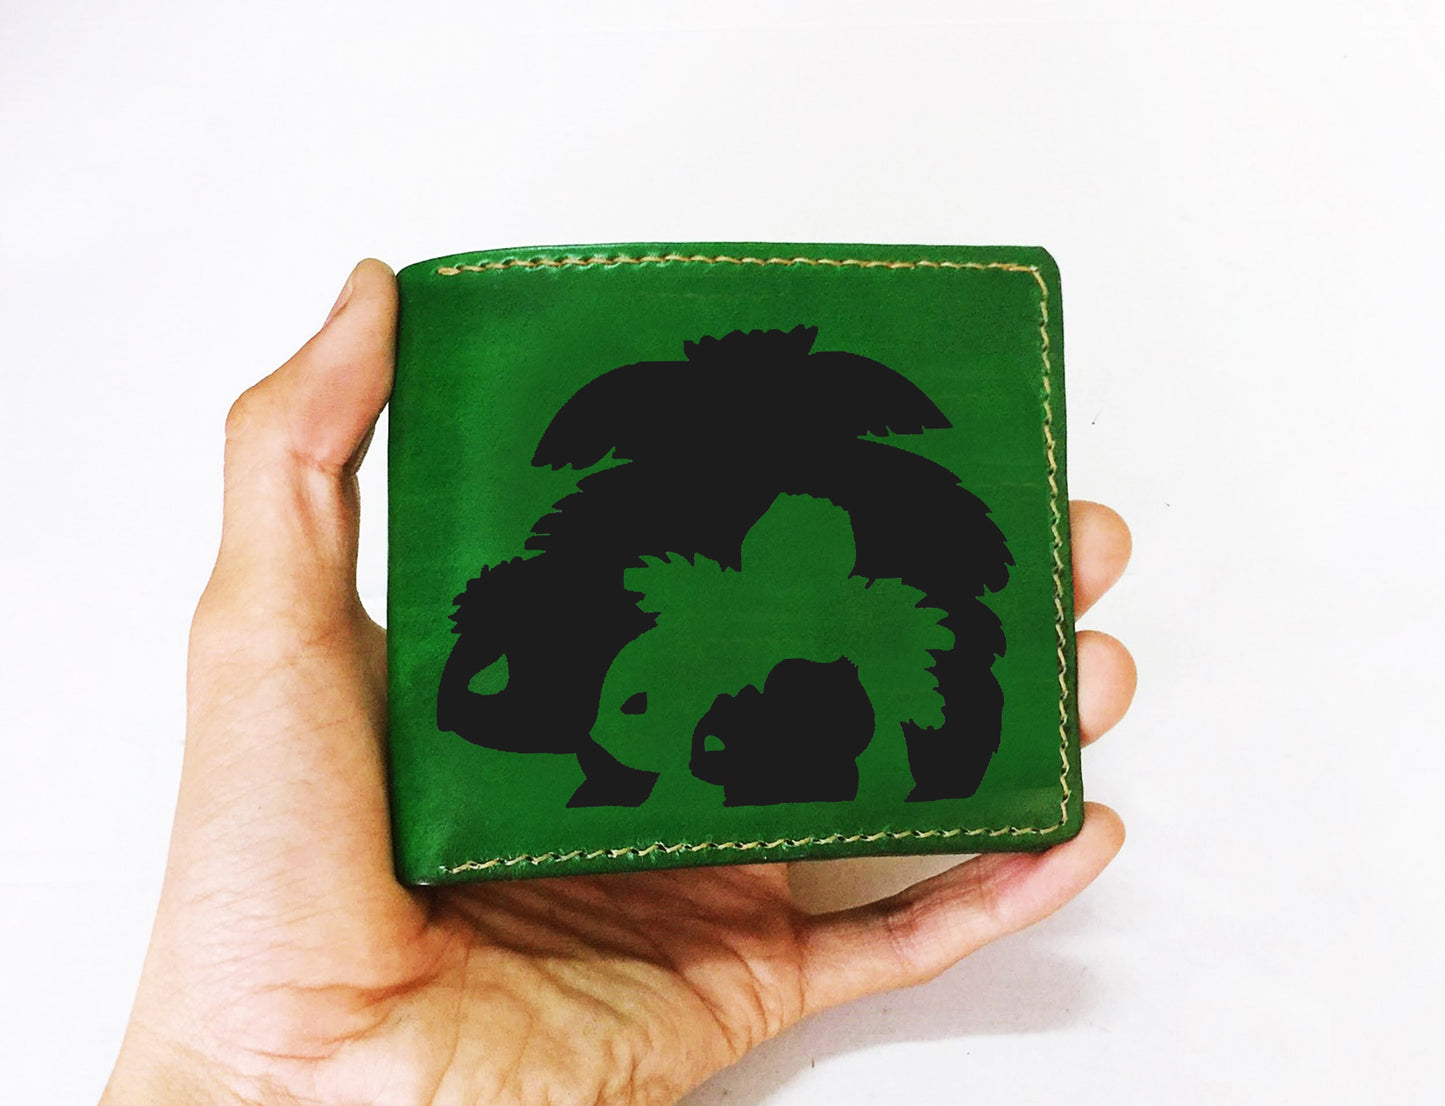 Mayan Corner - Personalized leather handmade wallet, pokemon leather wallet, pikachu evolution art gift, pokemon gift idea for friend, custom pokemon wallet for boyfriend, brother